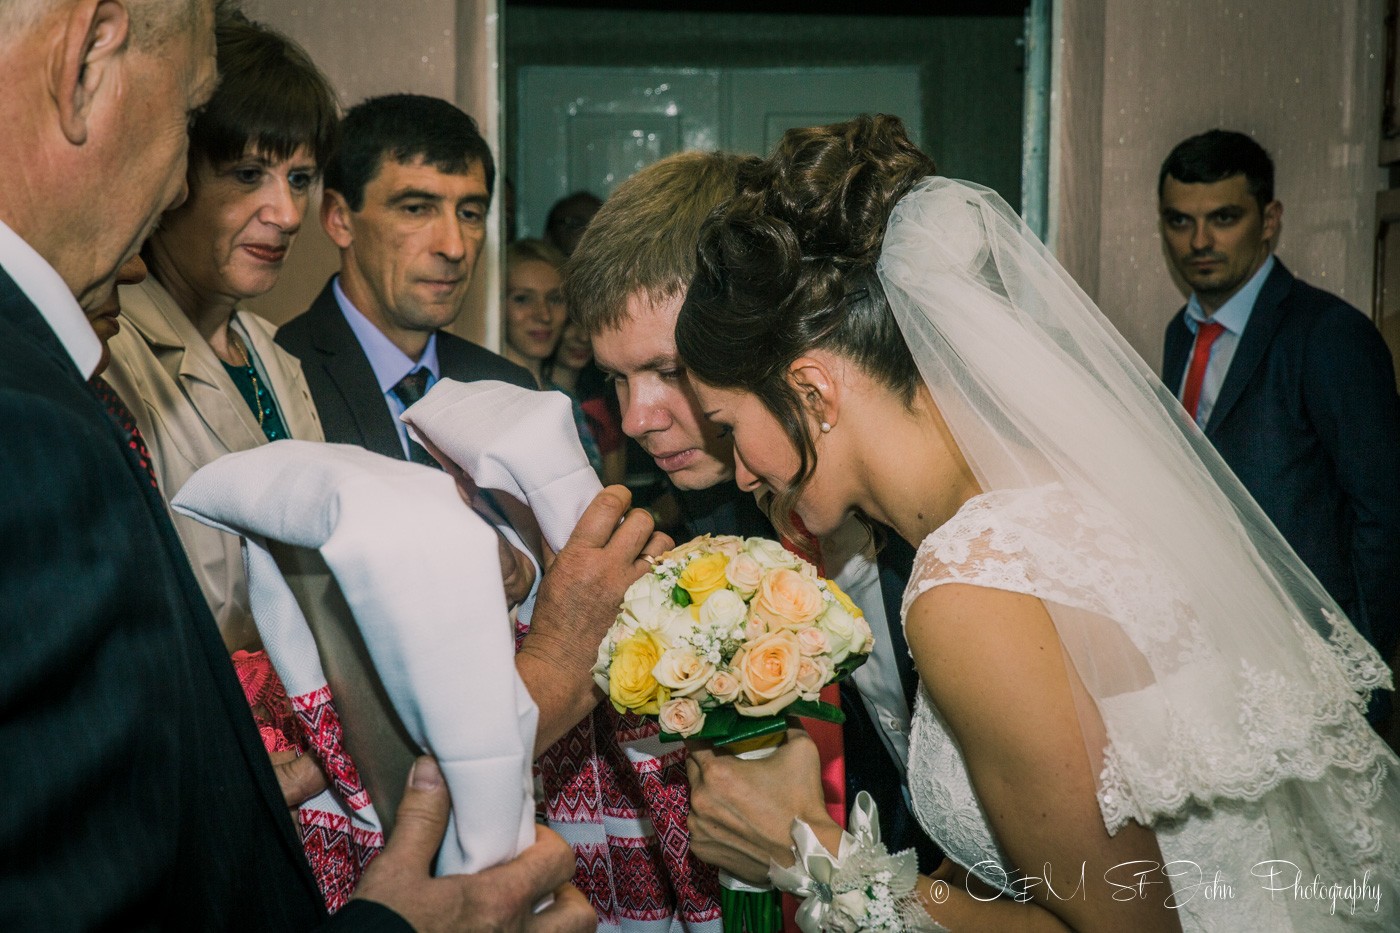 Blahoslovenja (Blessings) ritual at Ukrainian wedding tradition